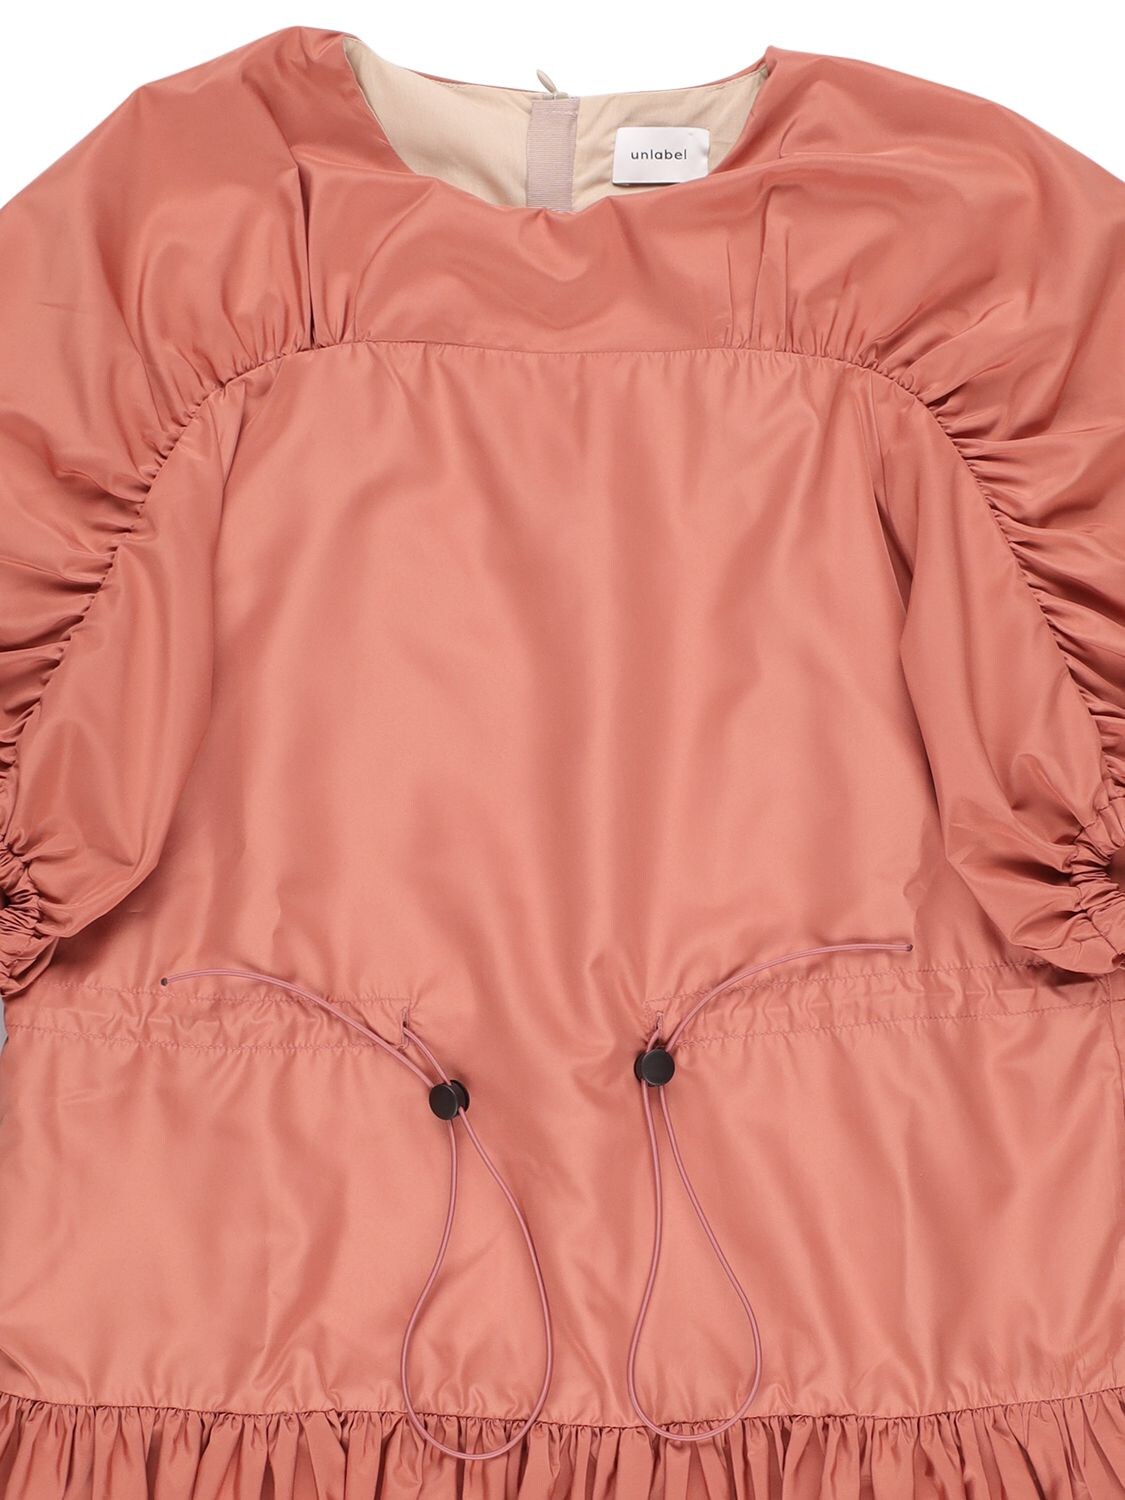 Unlabel Kids' Tiered Tech Mini Dress In Pink